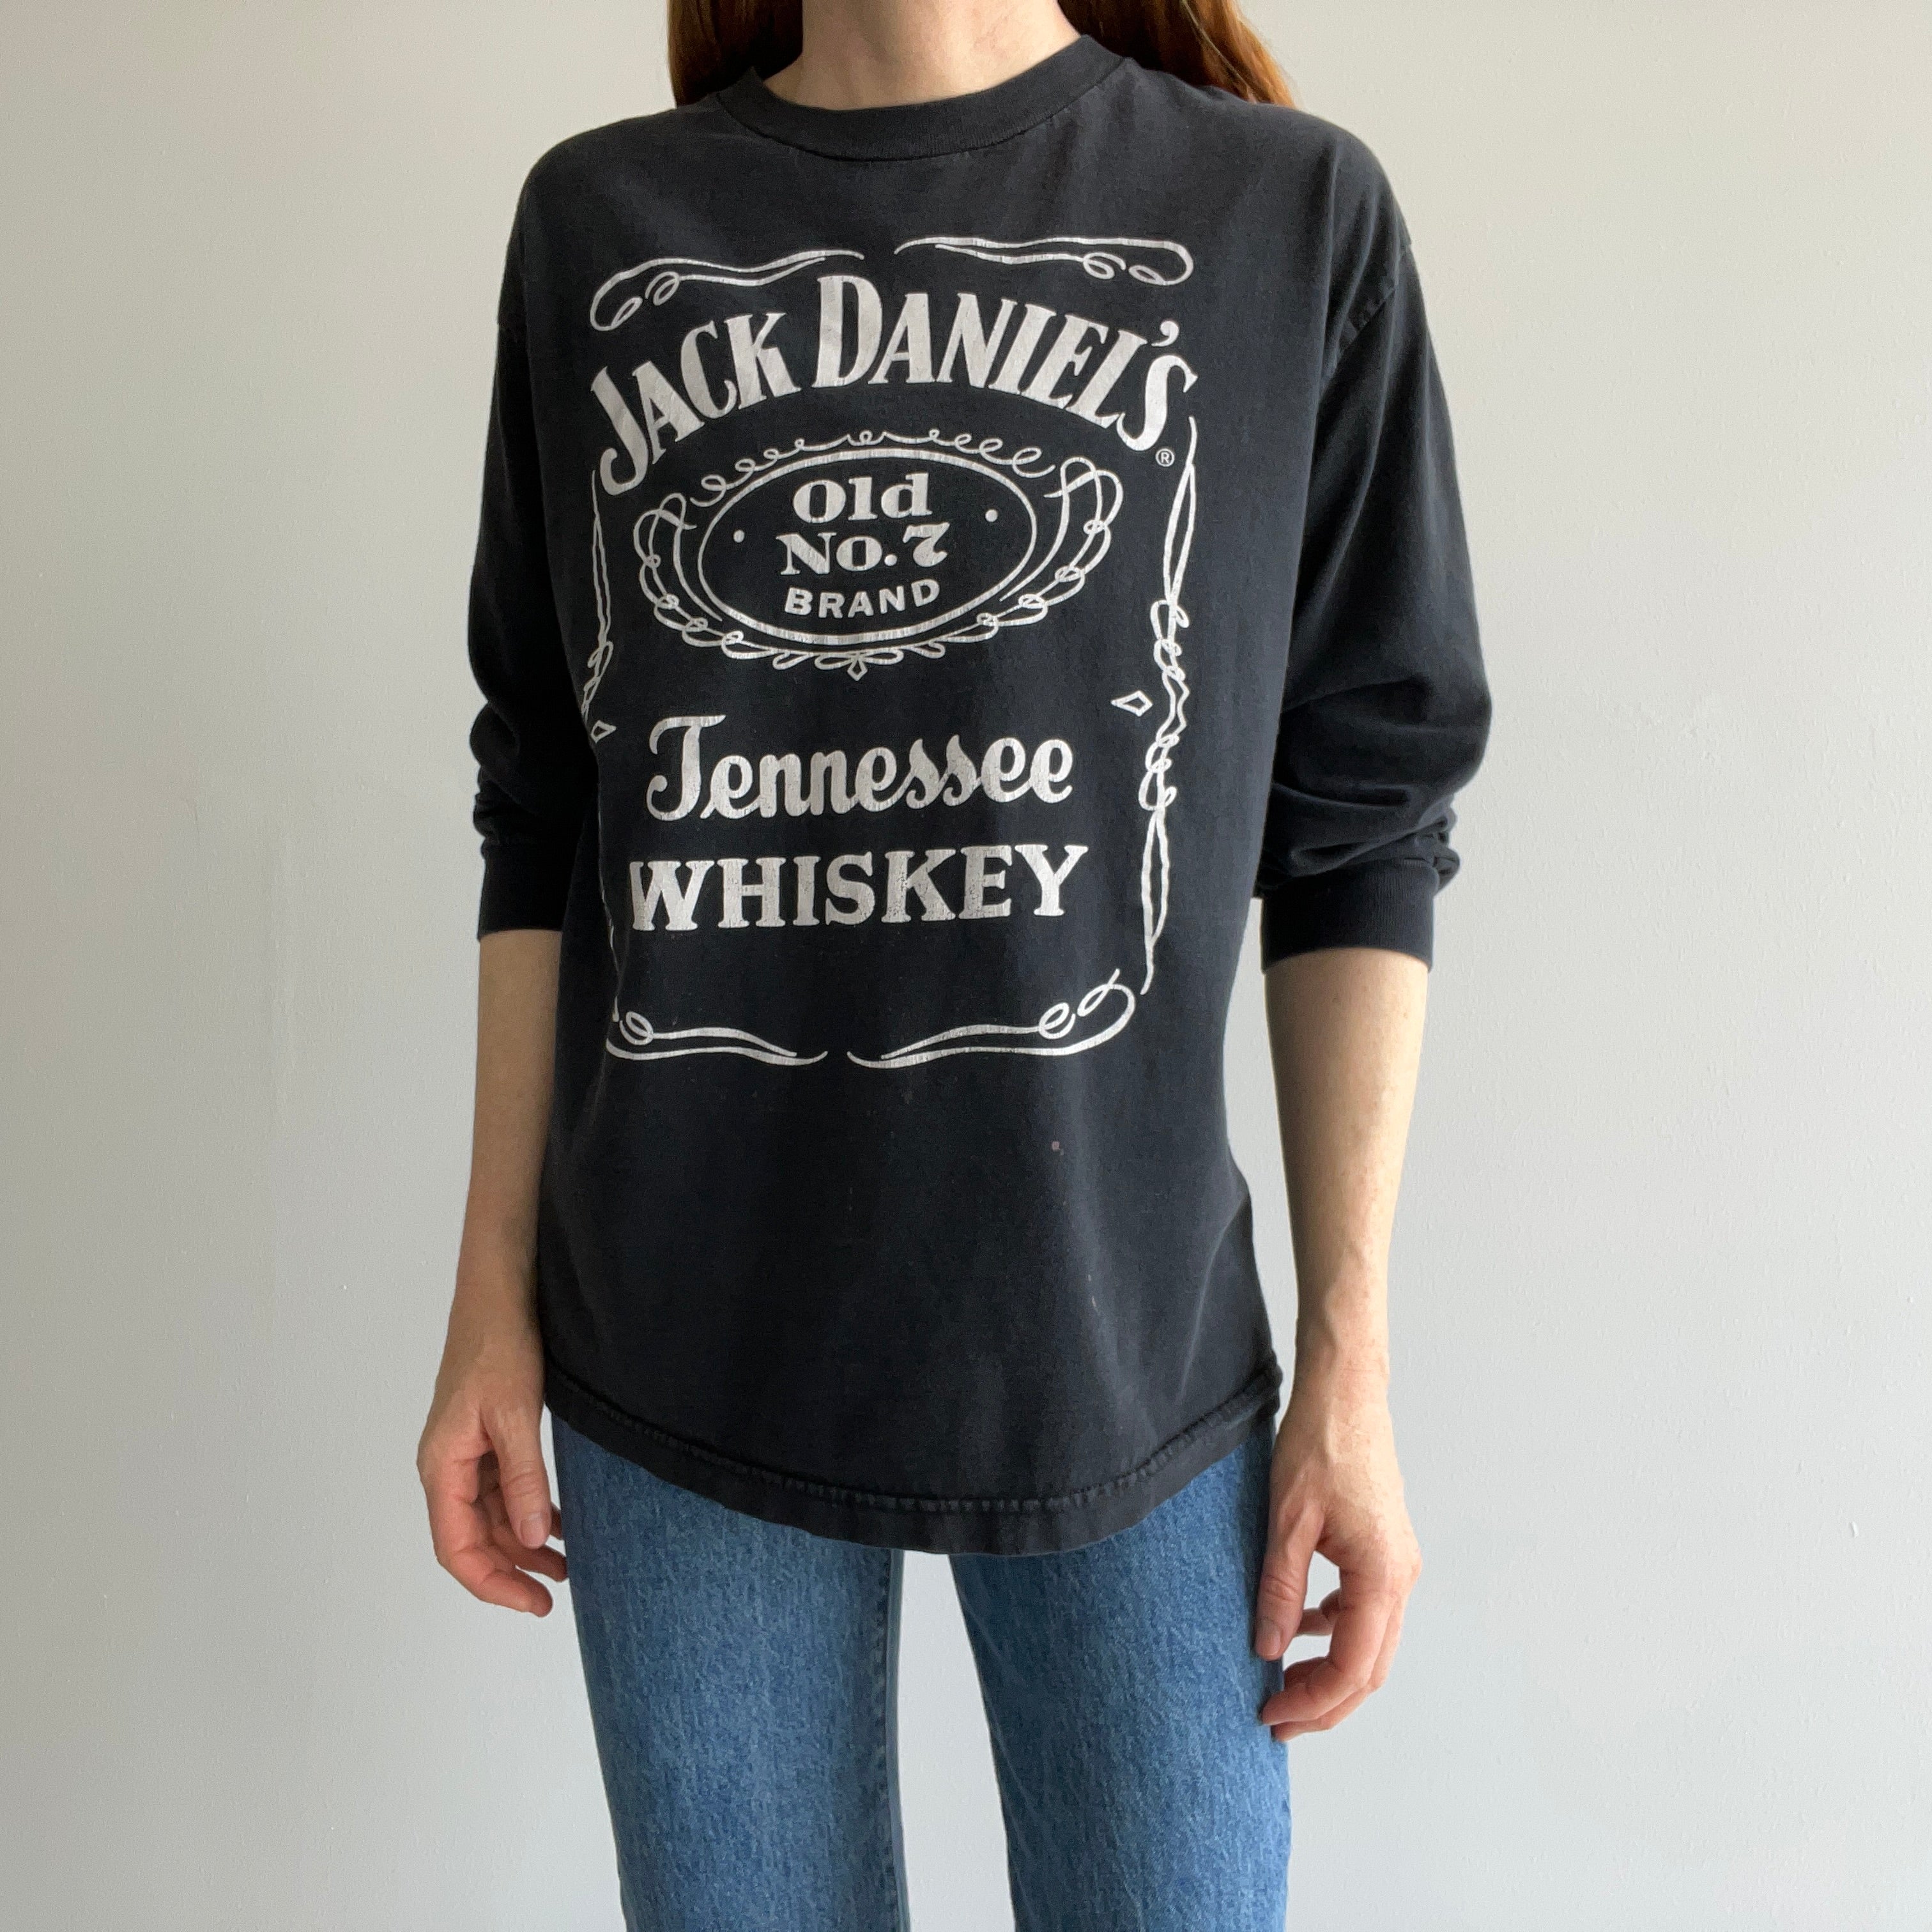 2004 JD Whiskey Long Sleeve Cotton T-Shirt